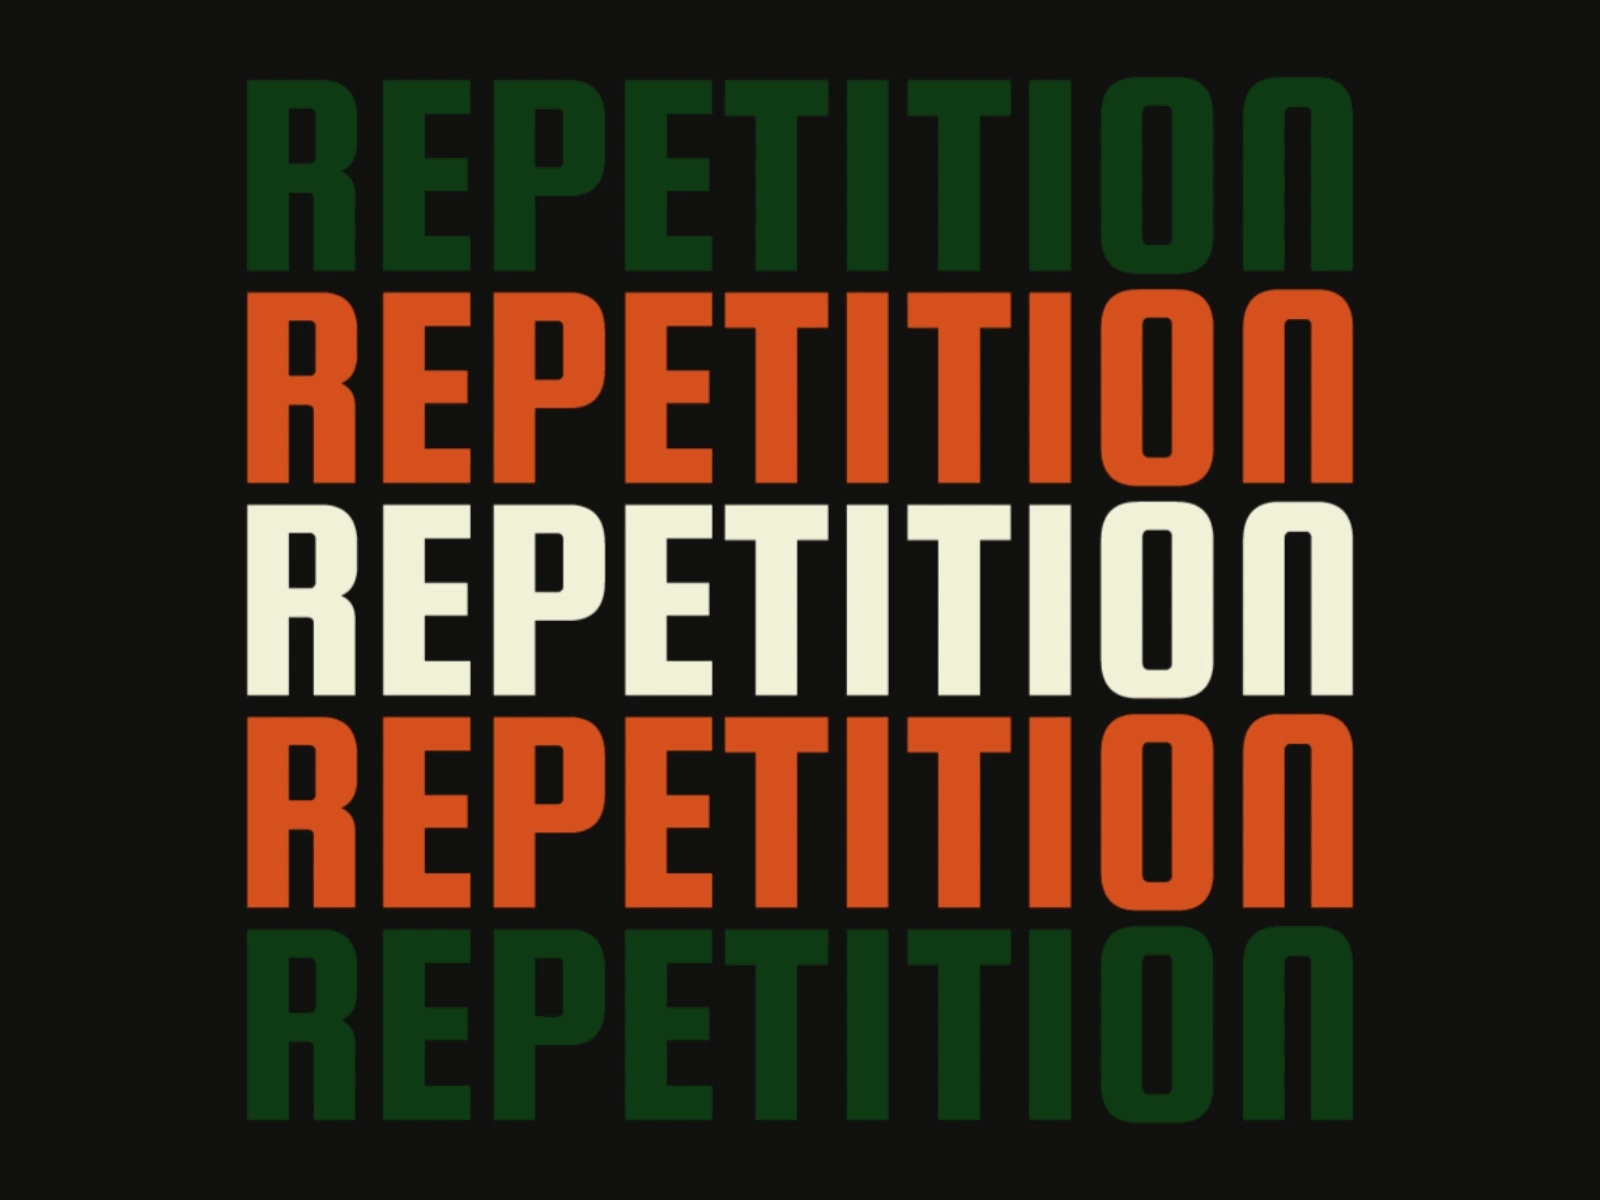 Design Principles Animation — Repetition